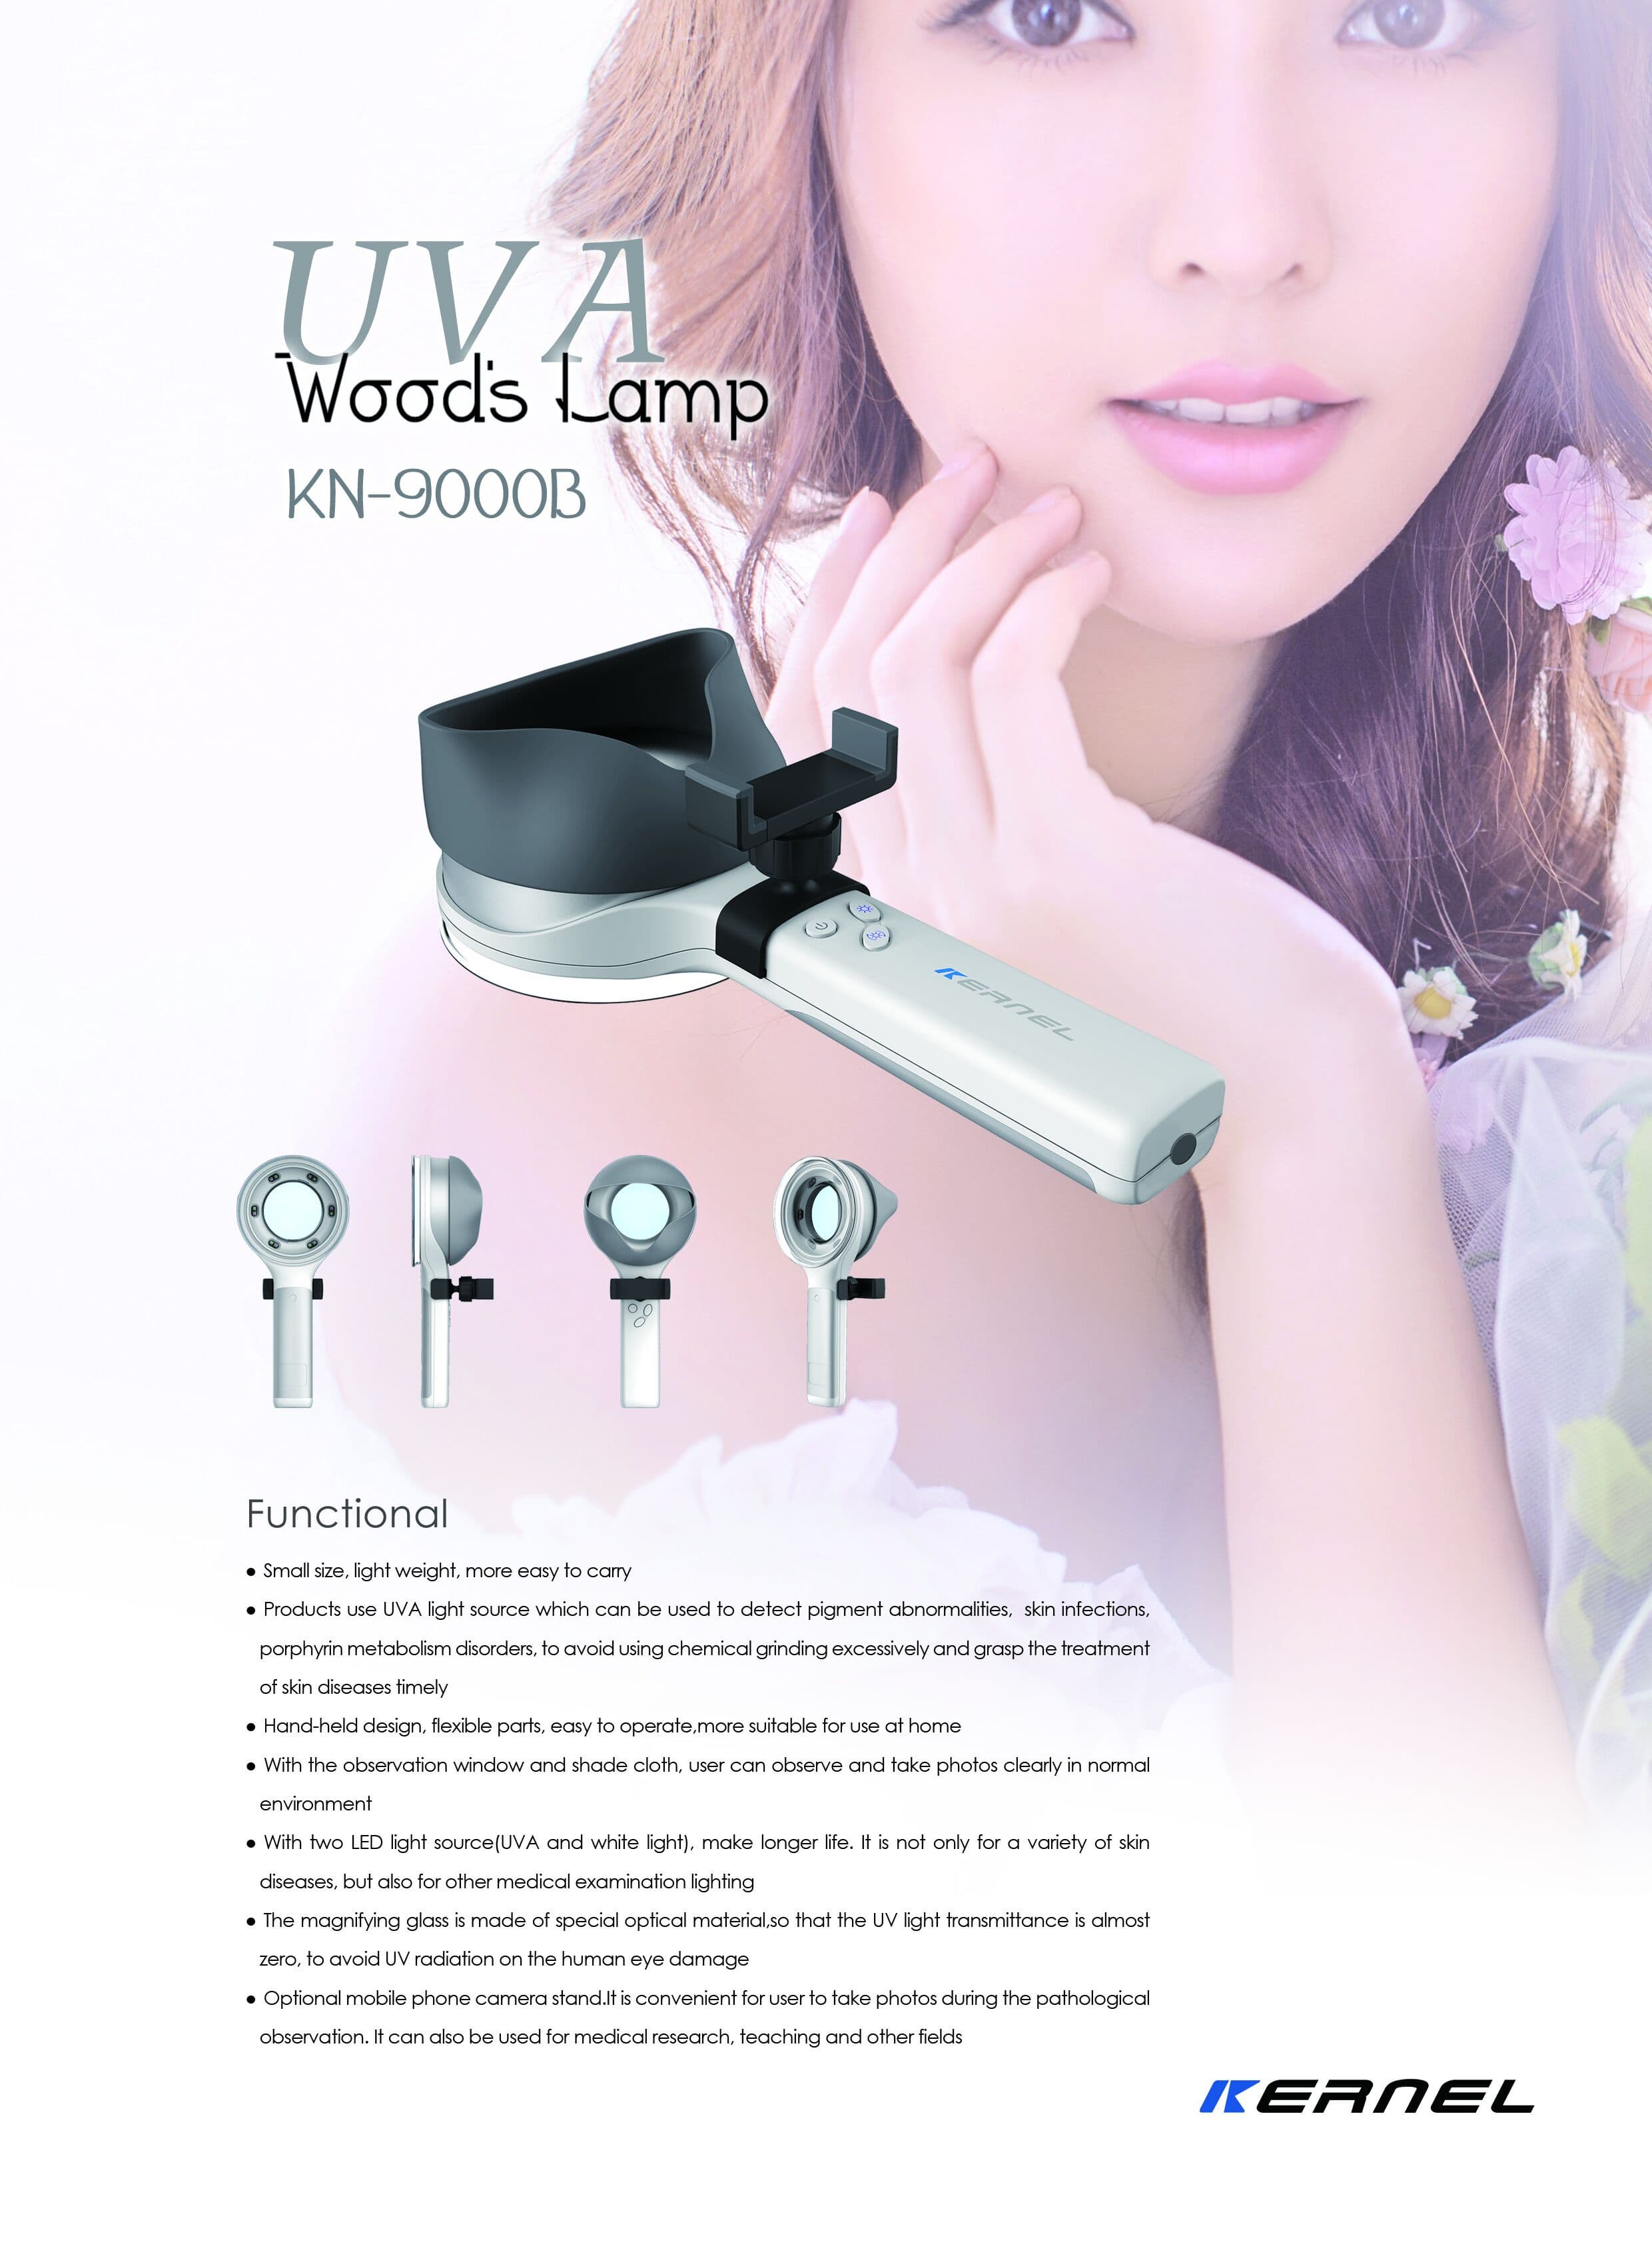 Wood lamp to diagnose the skin disease